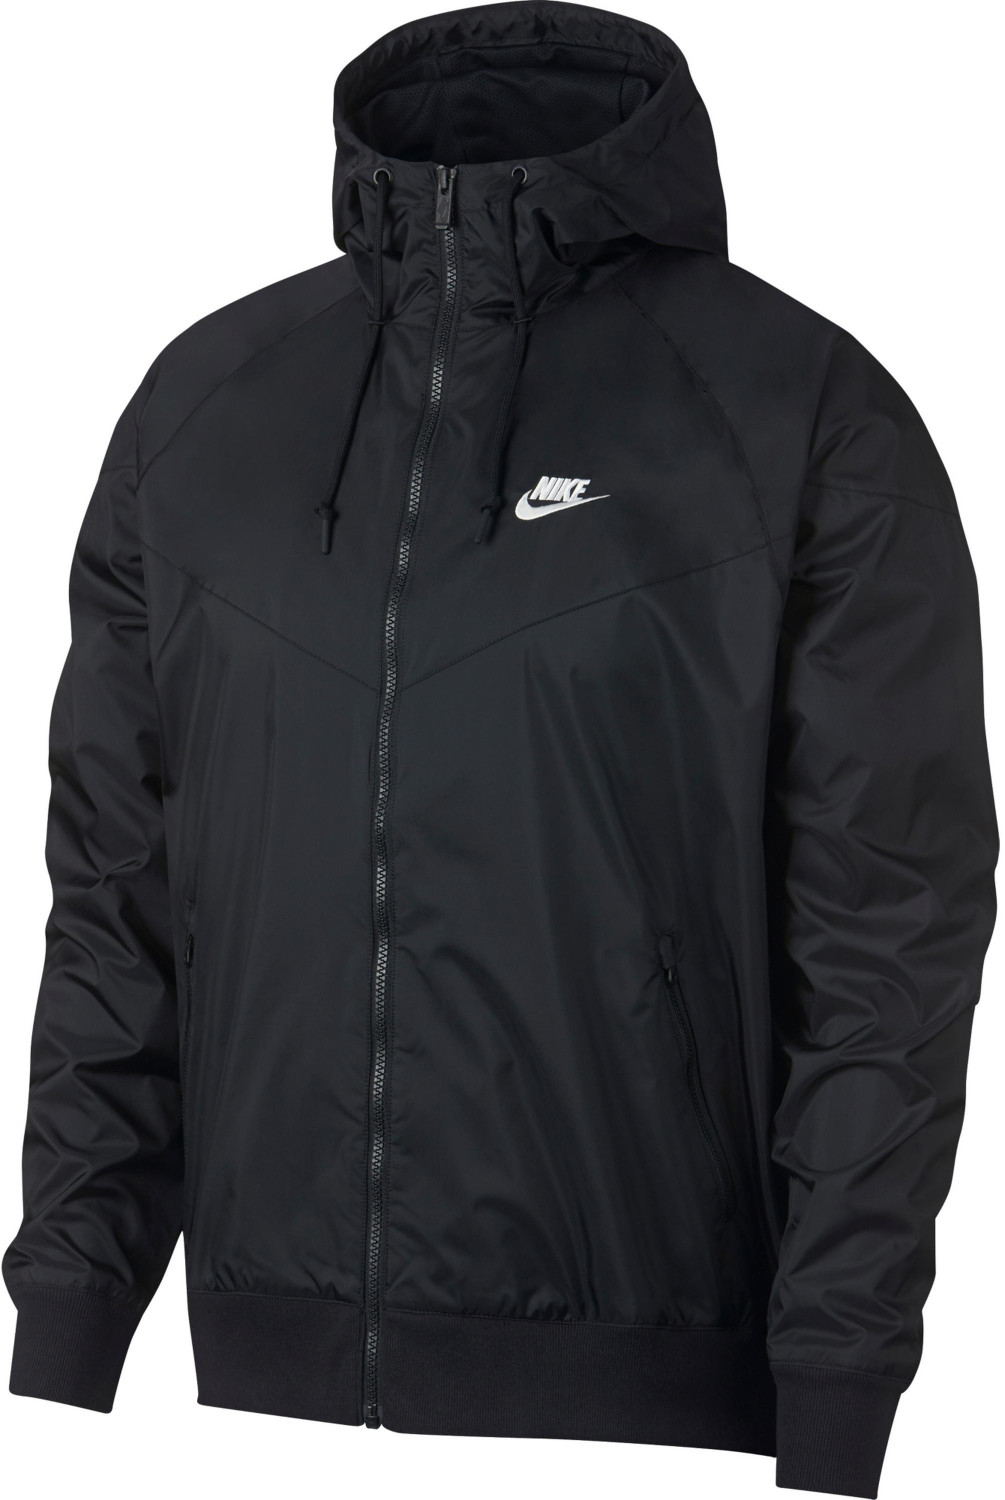 Nike Sportswear Windrunner Black/Black/Black/Sail (AR2191-010)